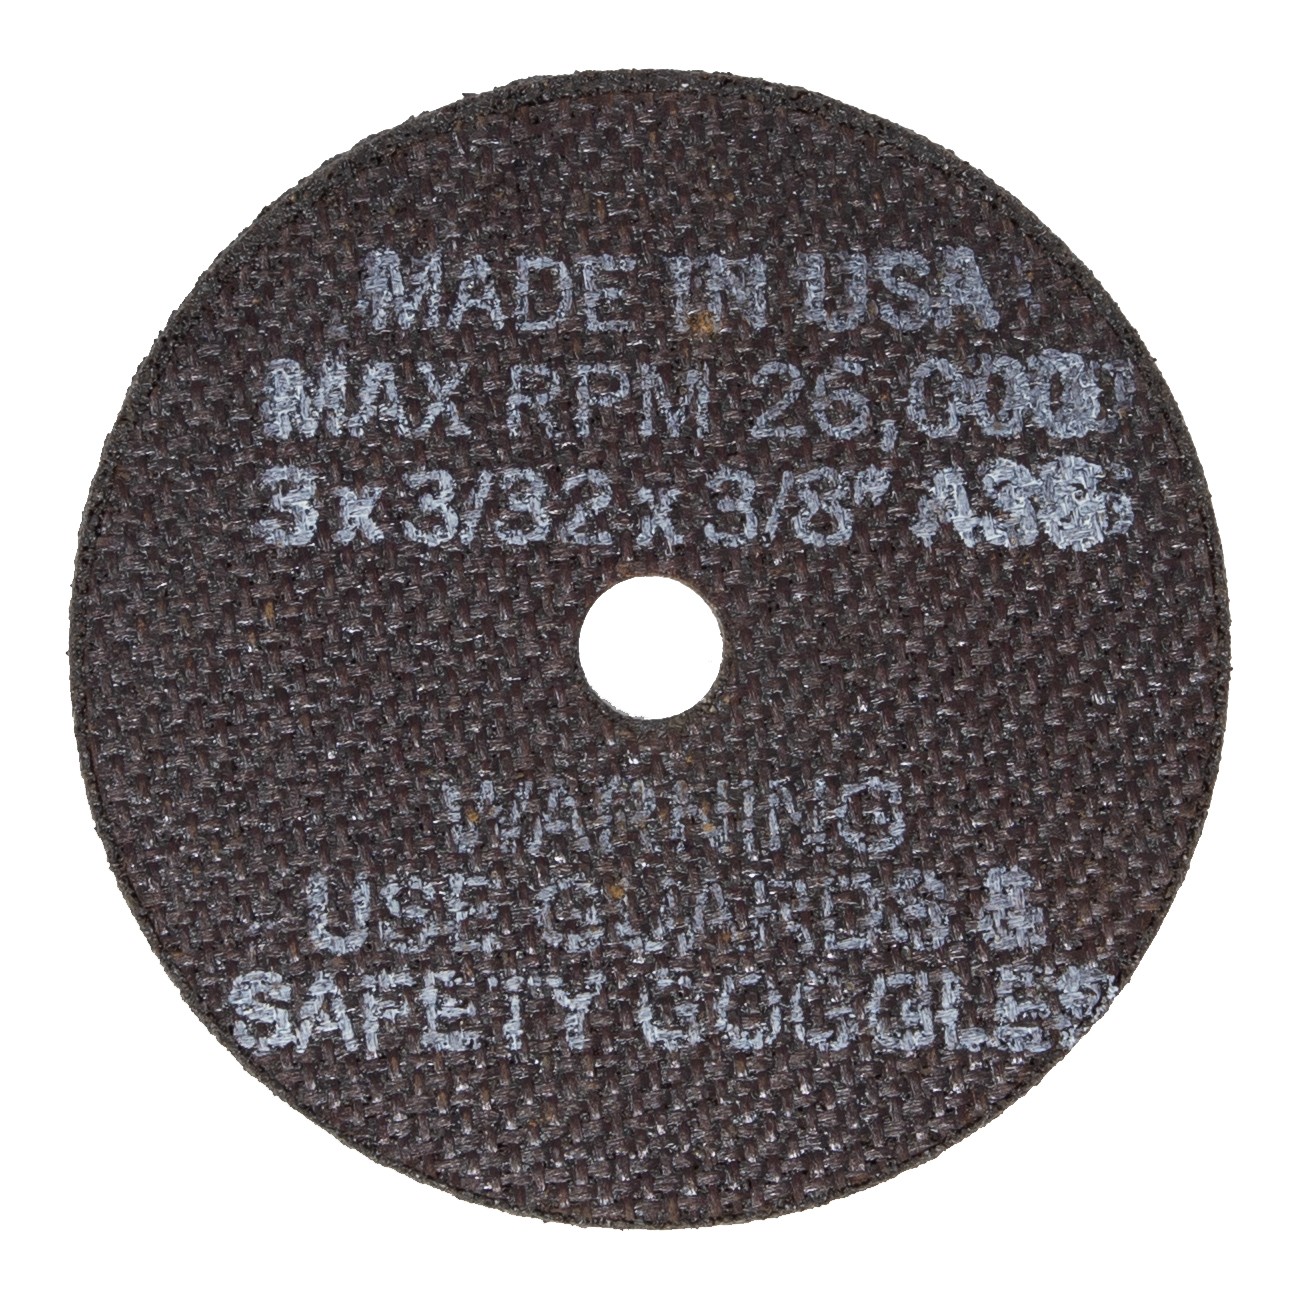 3" x 3/32" Type 1 Industrial Grade Metal Cut-Off Wheel - 5 Pack Carded